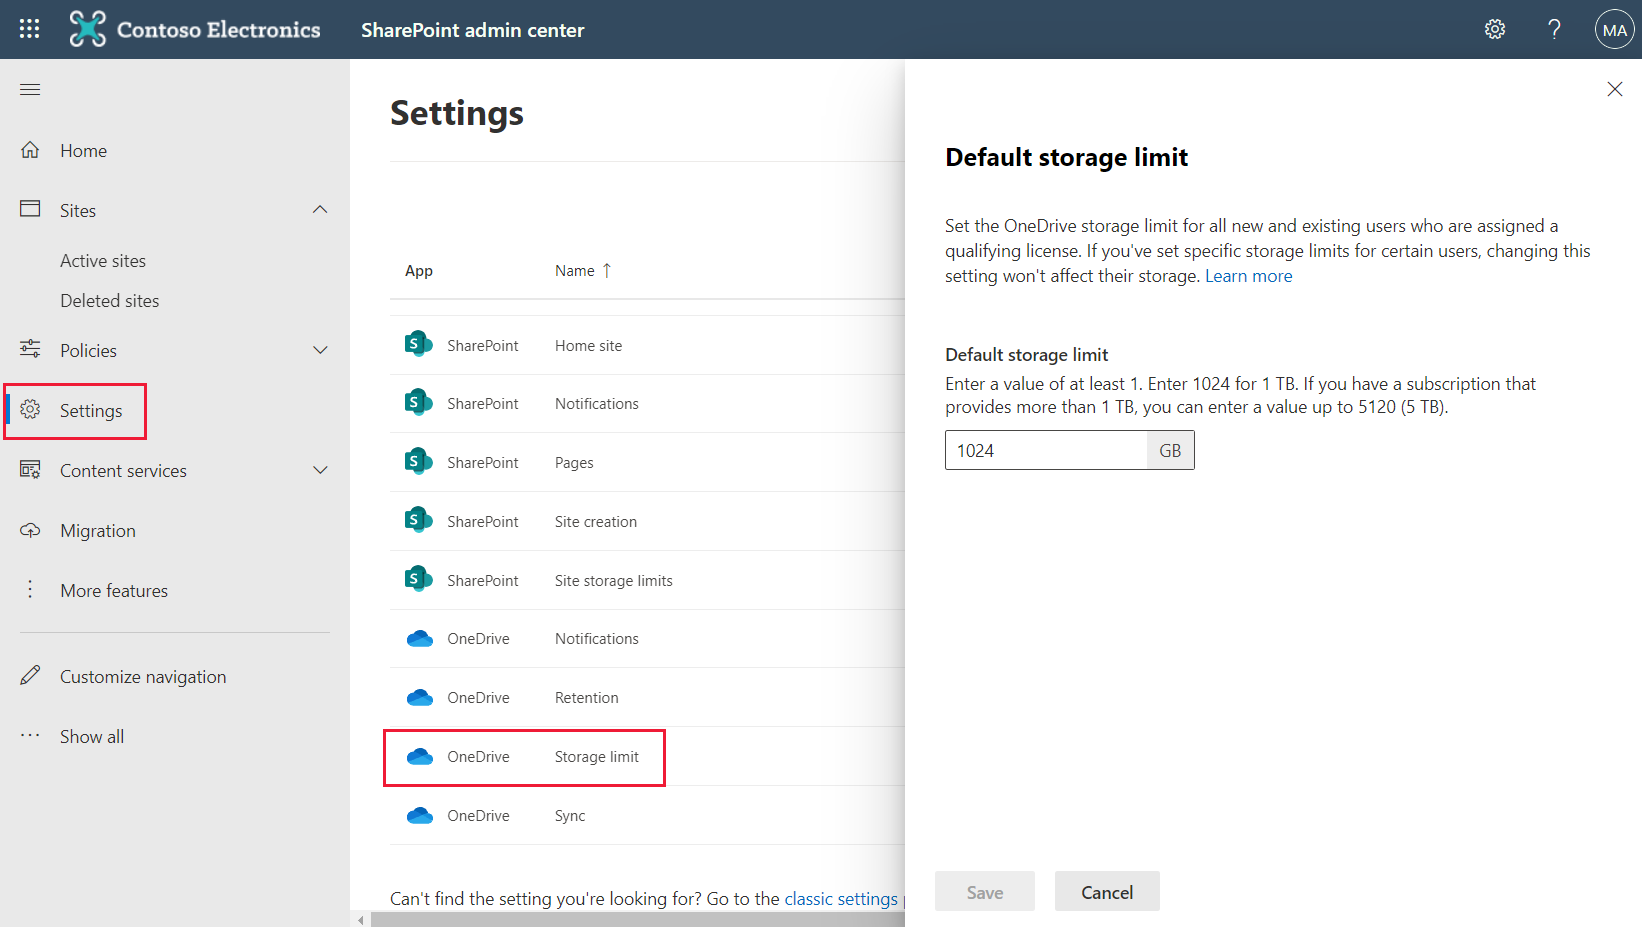 Screenshot of the SharePoint admin center OneDrive default storage limit settings.